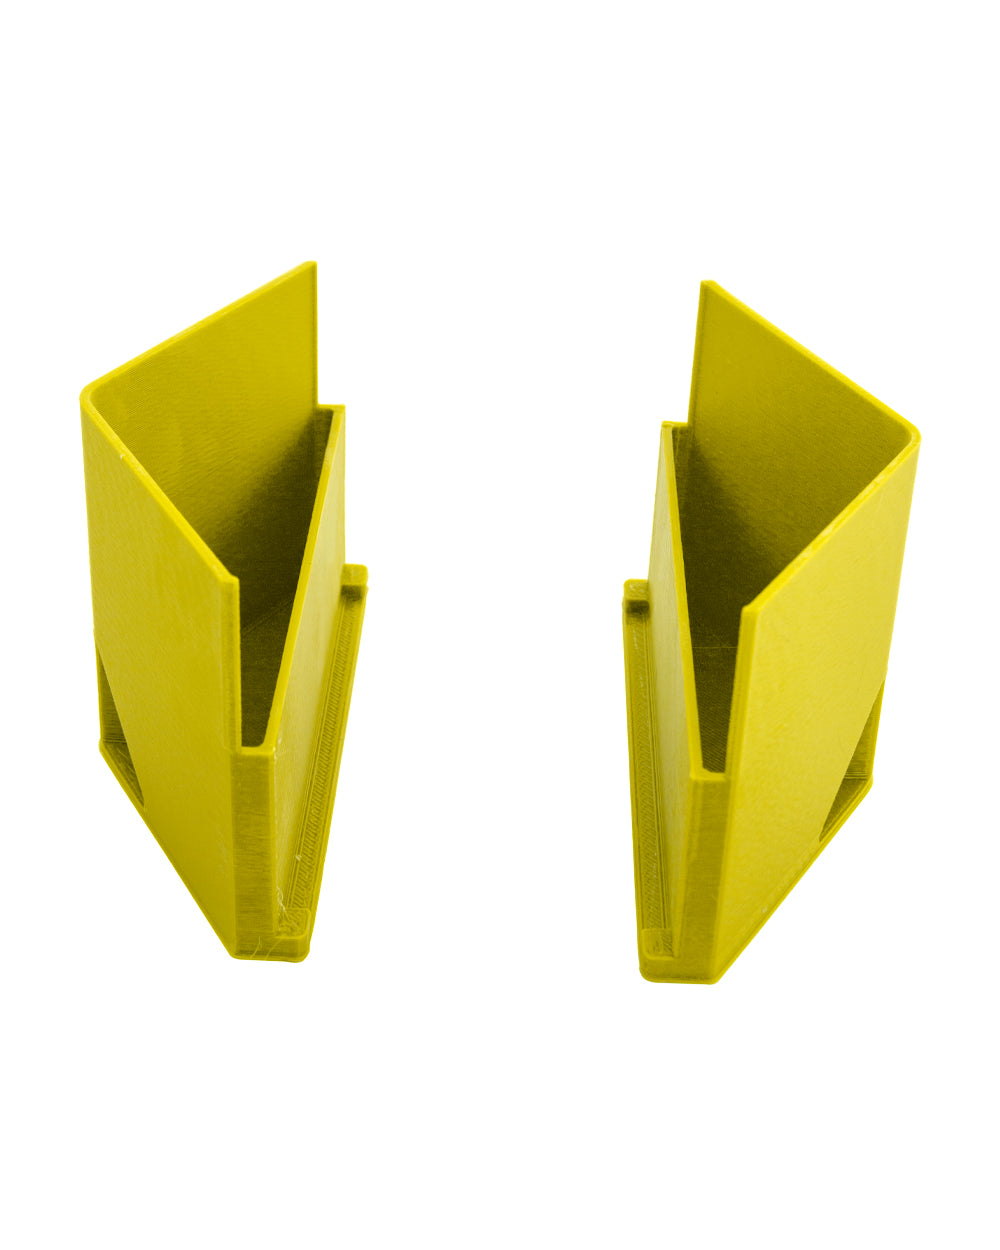 KING KONE | Yellow Vibration Pre-Rolled Cones Filling Machine 84/98/109mm | Fill 169 Cones Per Run - 6